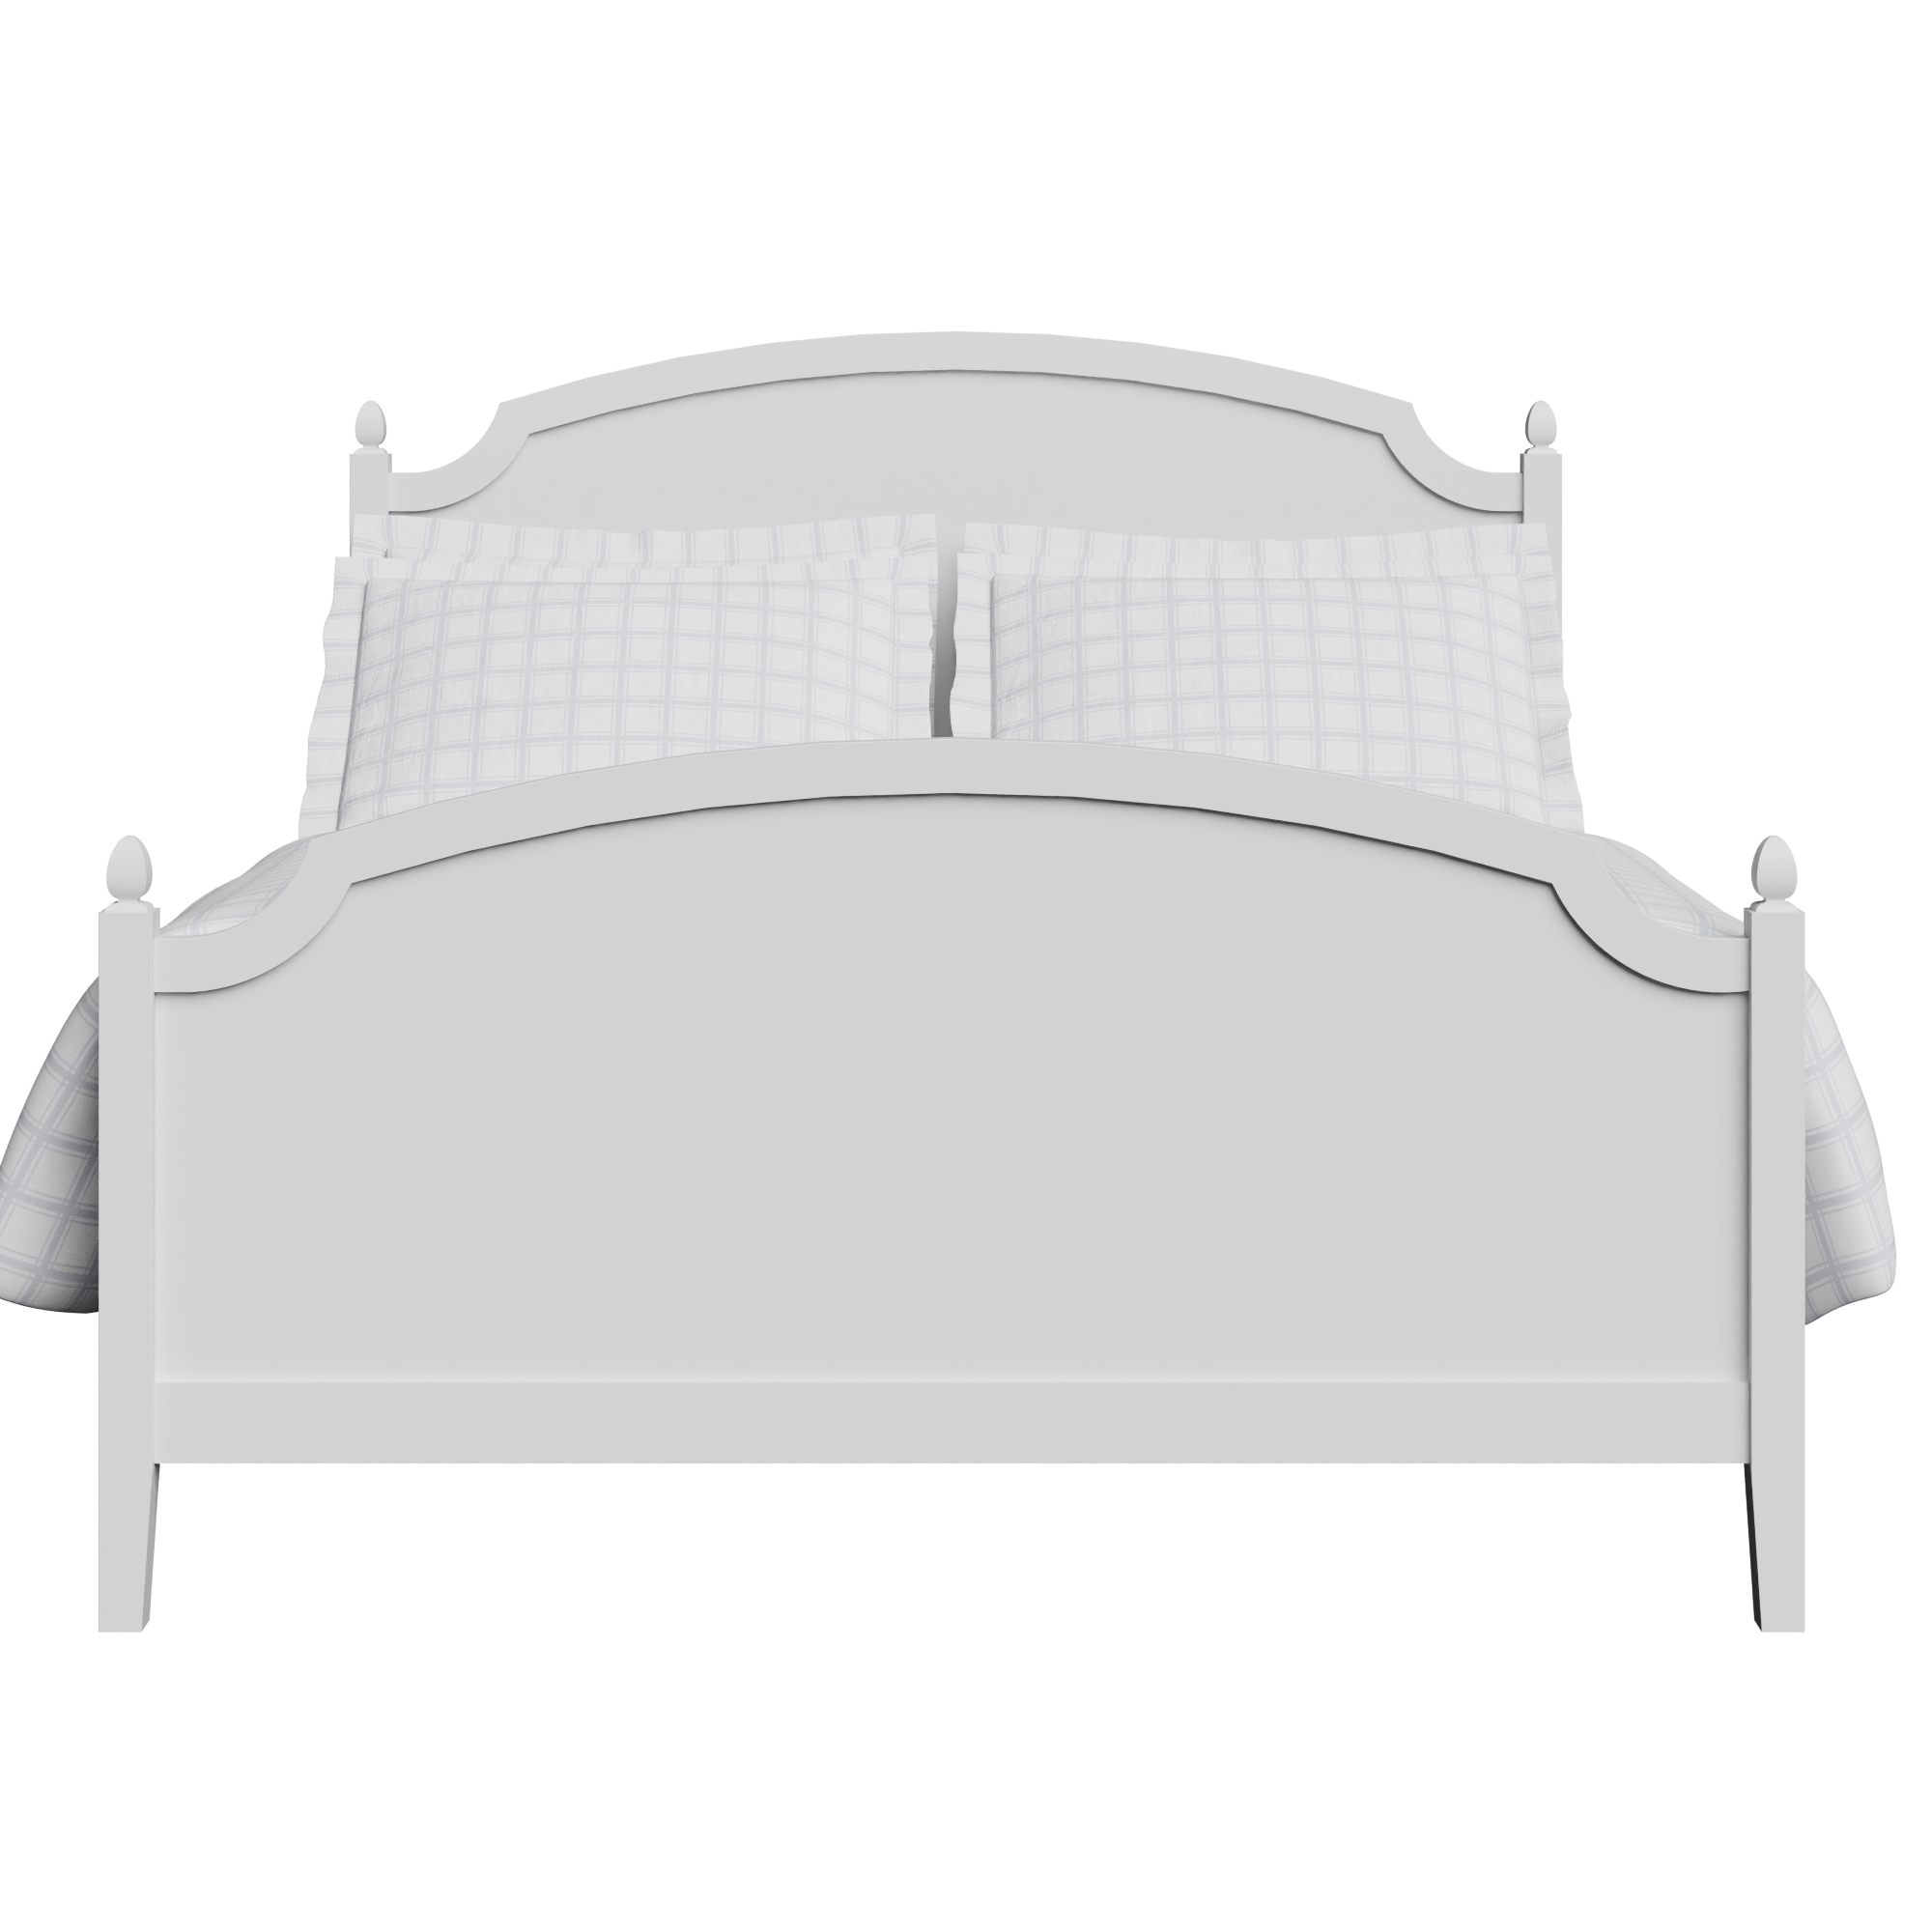 Kipling Painted painted wood bed in white